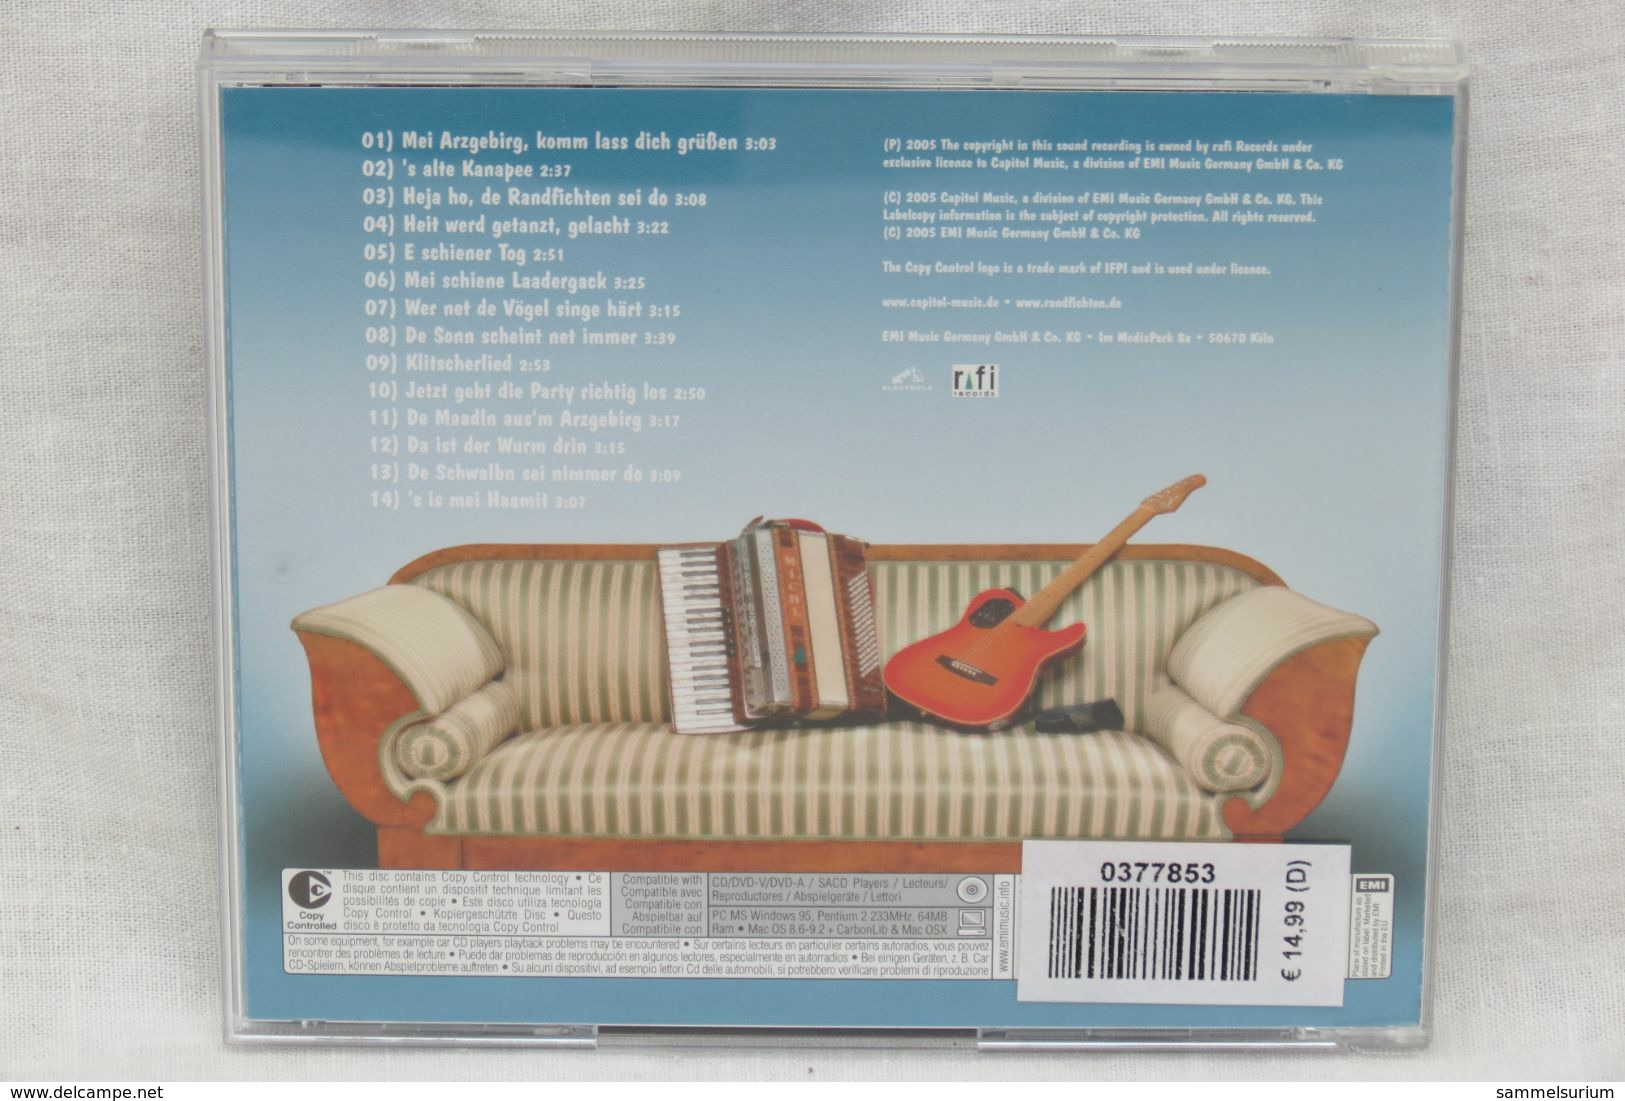 CD "De Randfichten" Heja Ho, De Randfichten Sei Do - Autres - Musique Allemande